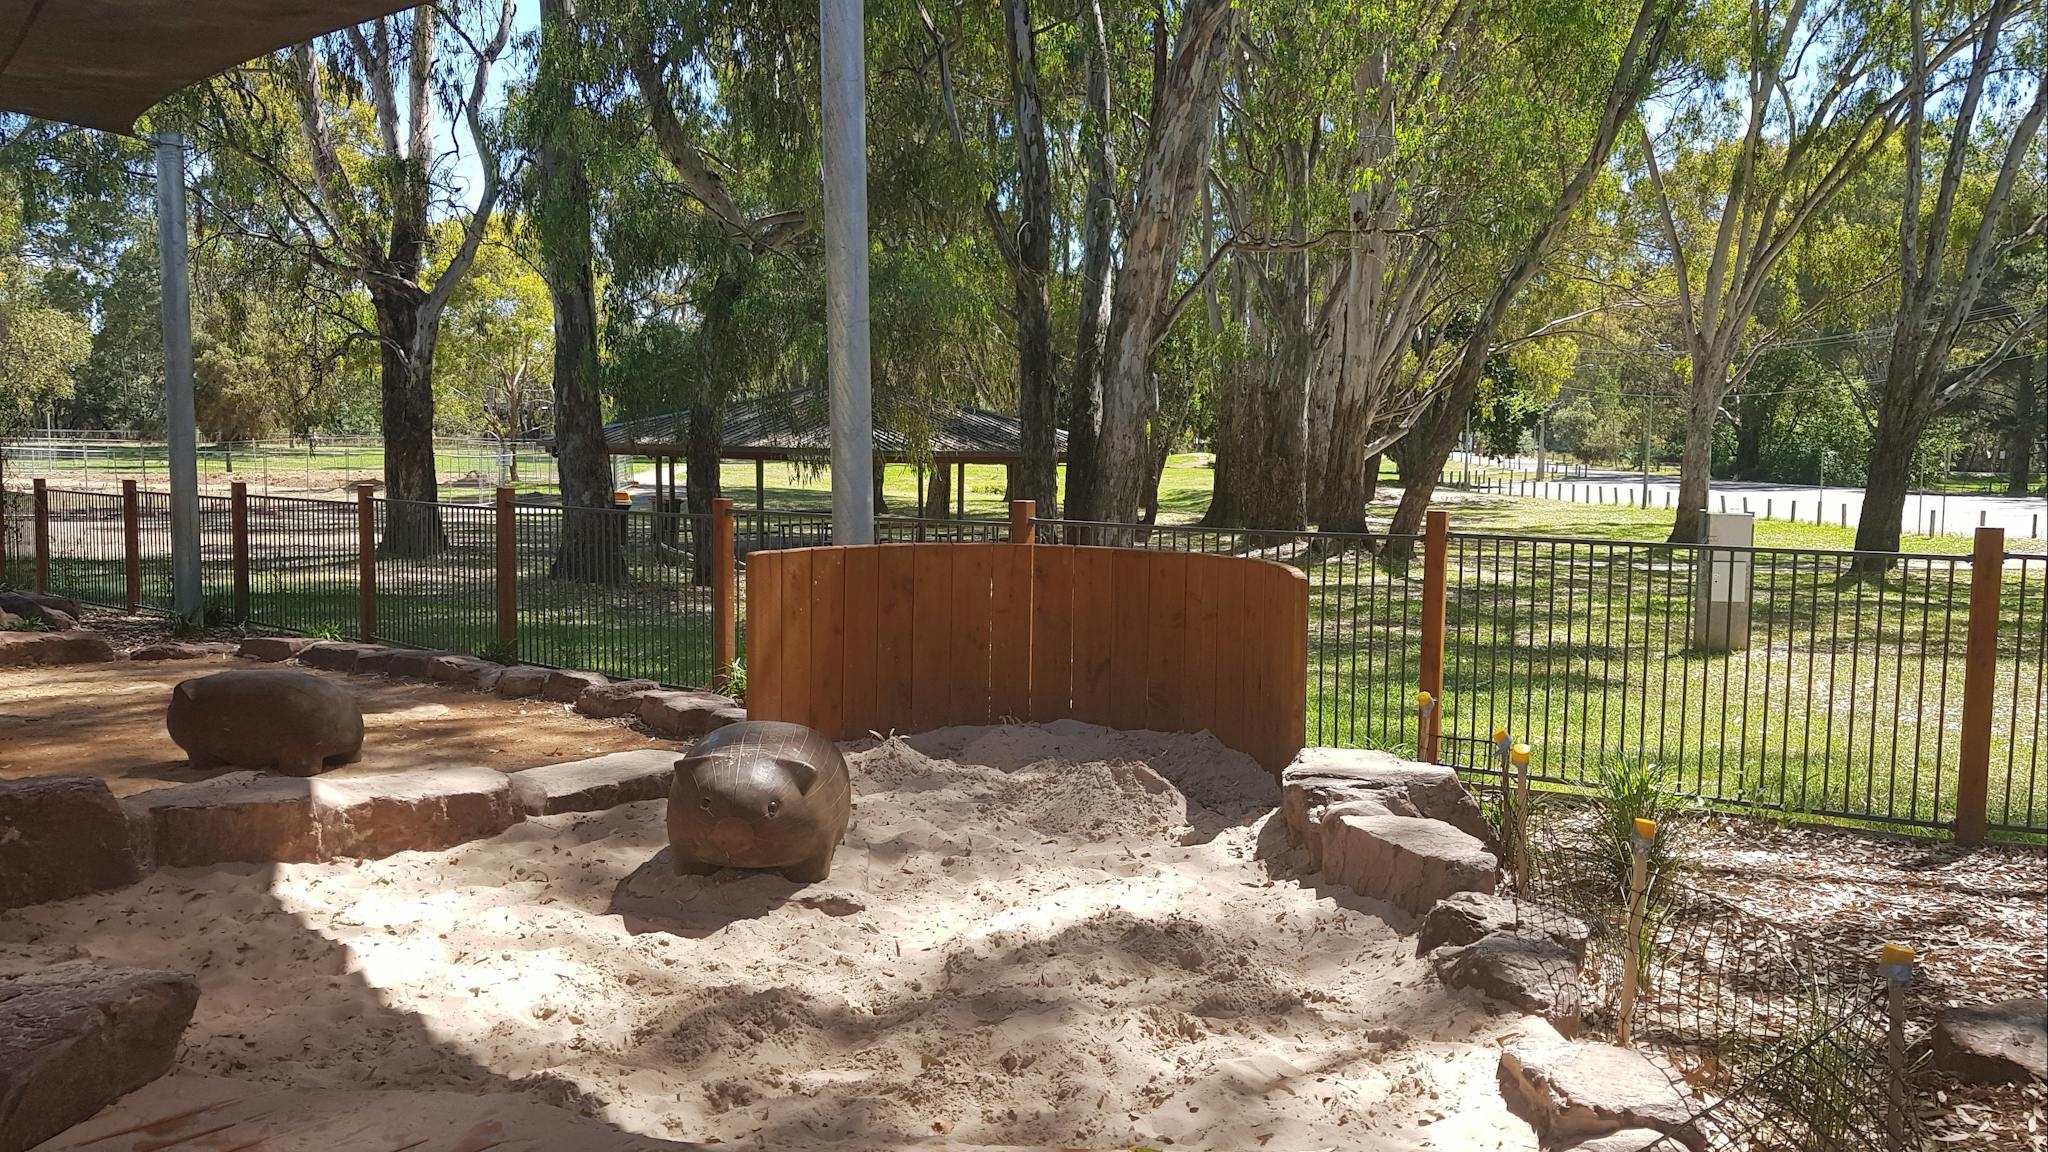 sun shades, childrens playground, wombat sculpture in sandpit, leafy trees, sunshine, fence, rotunda